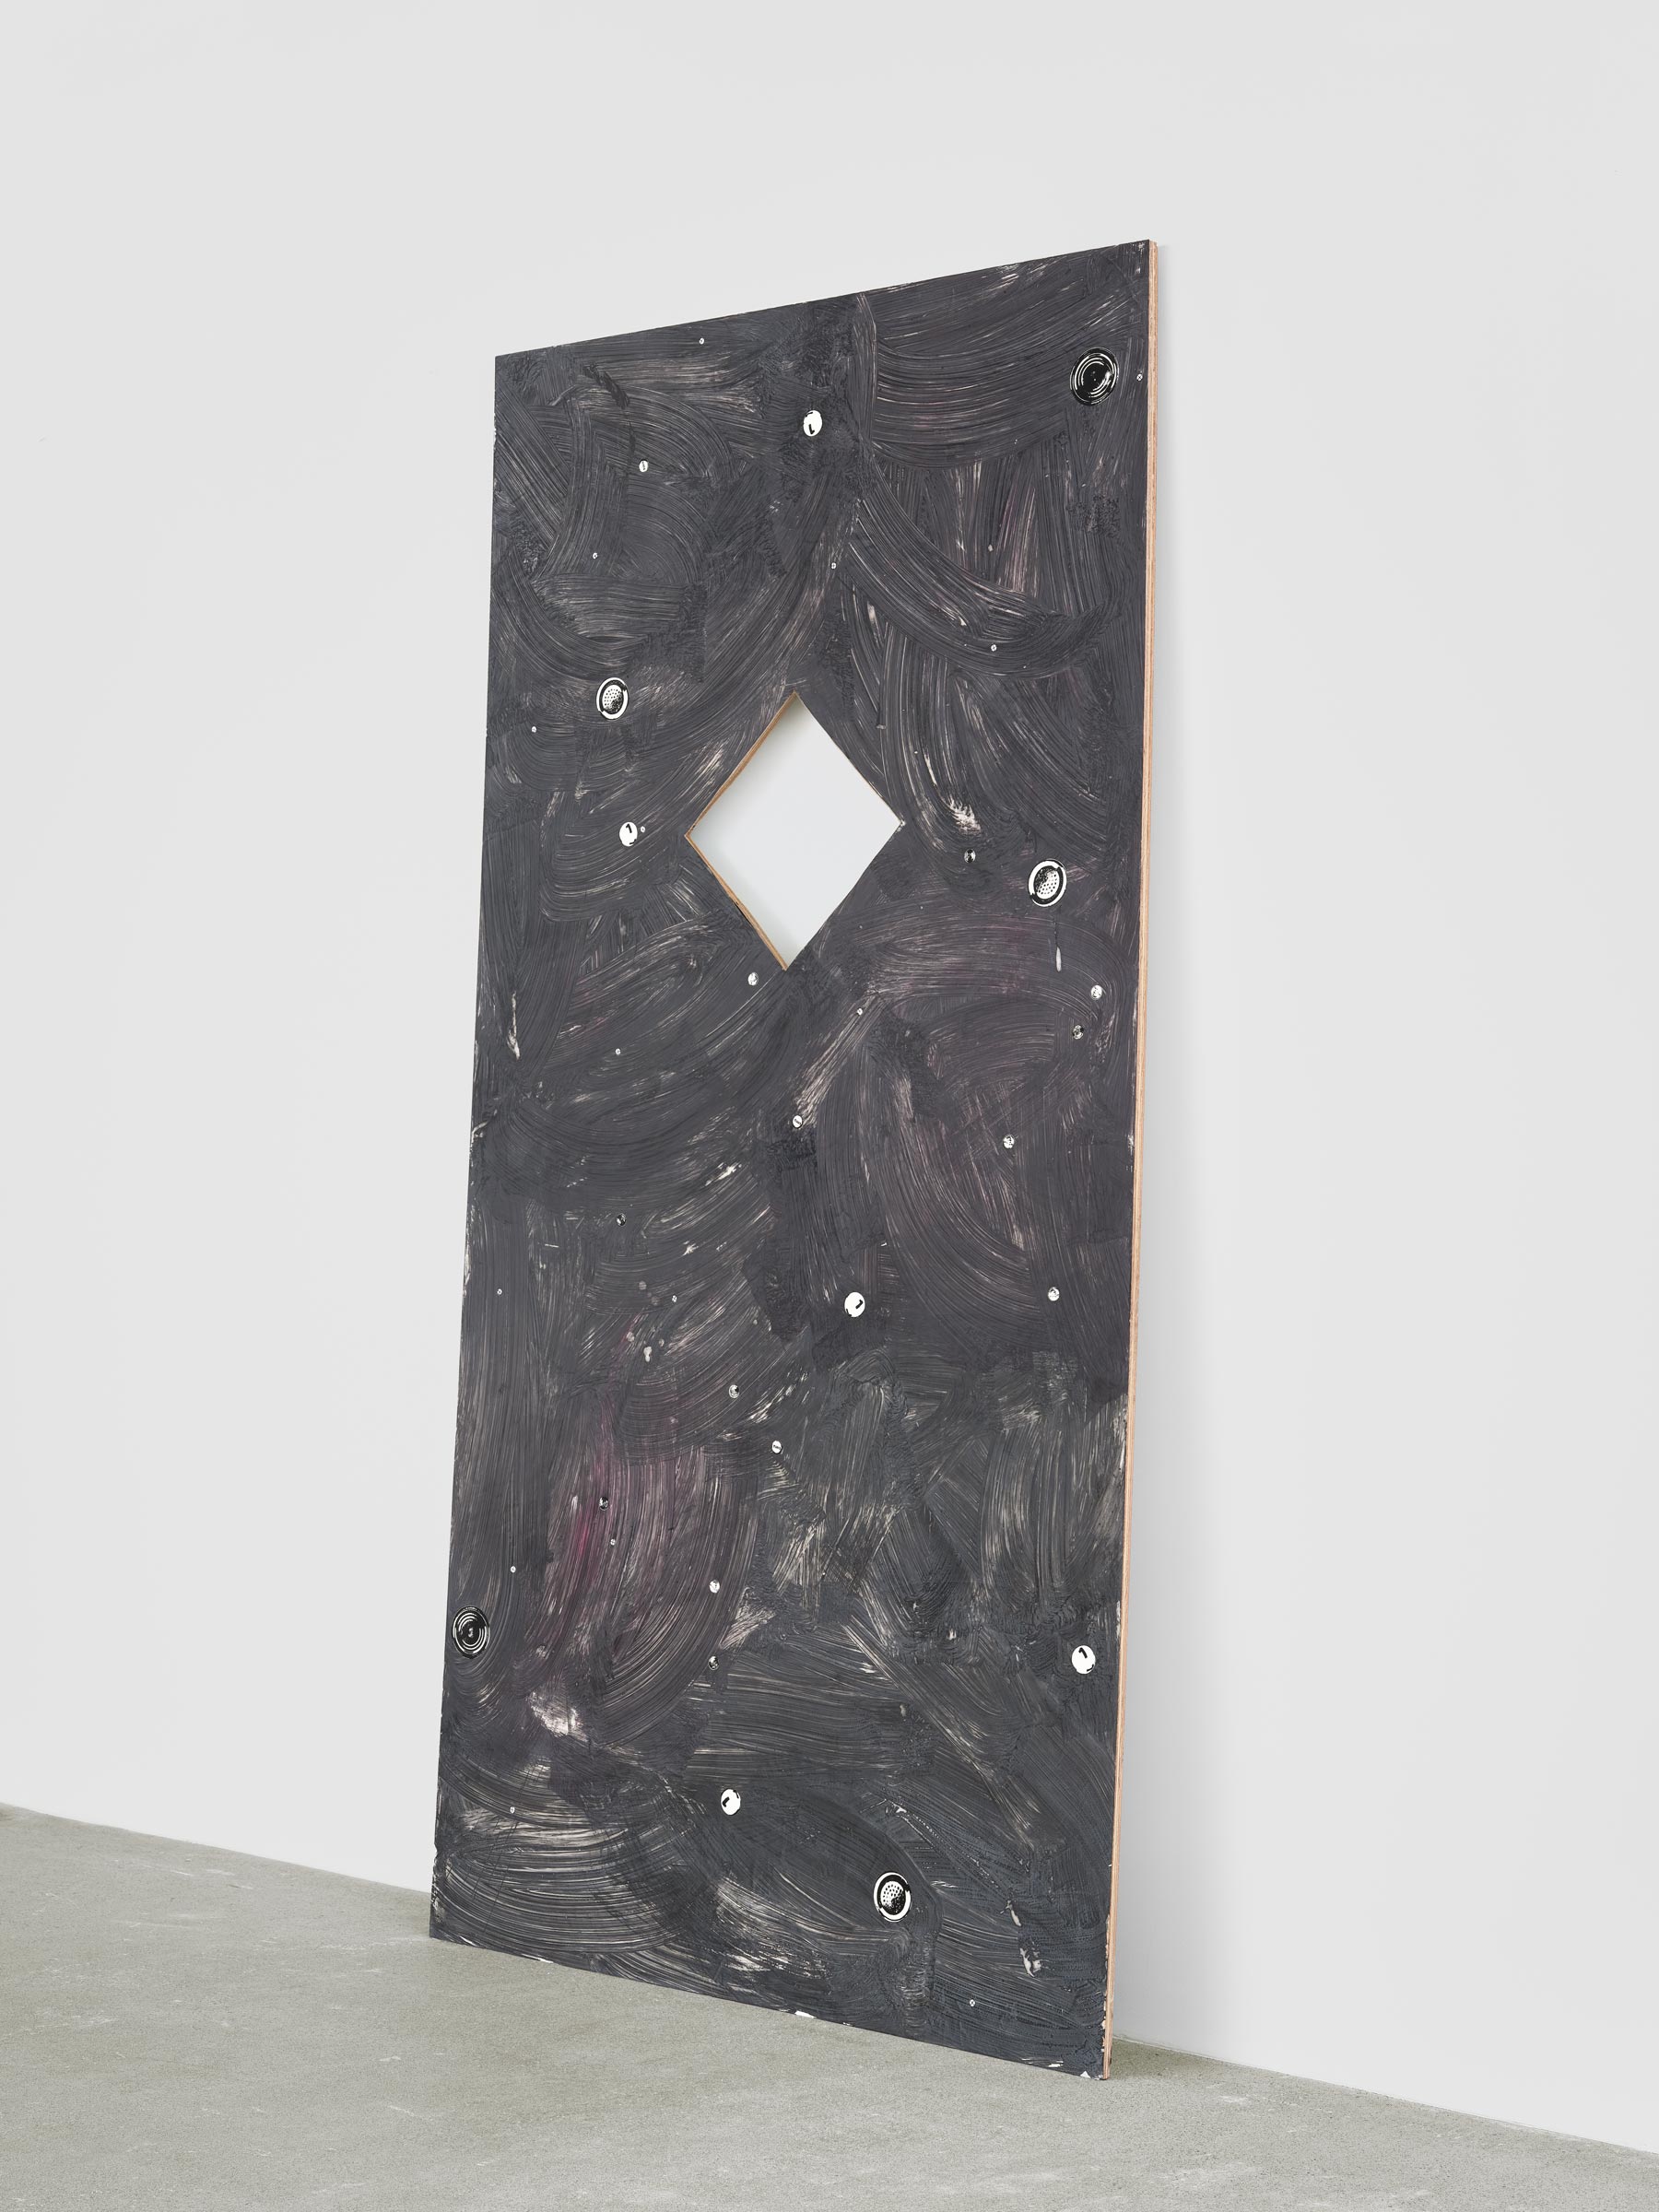 Alex Kwartler, Night Sky VI, 2022, Venetian plaster and enamel on plywood, 96 x 48 in.